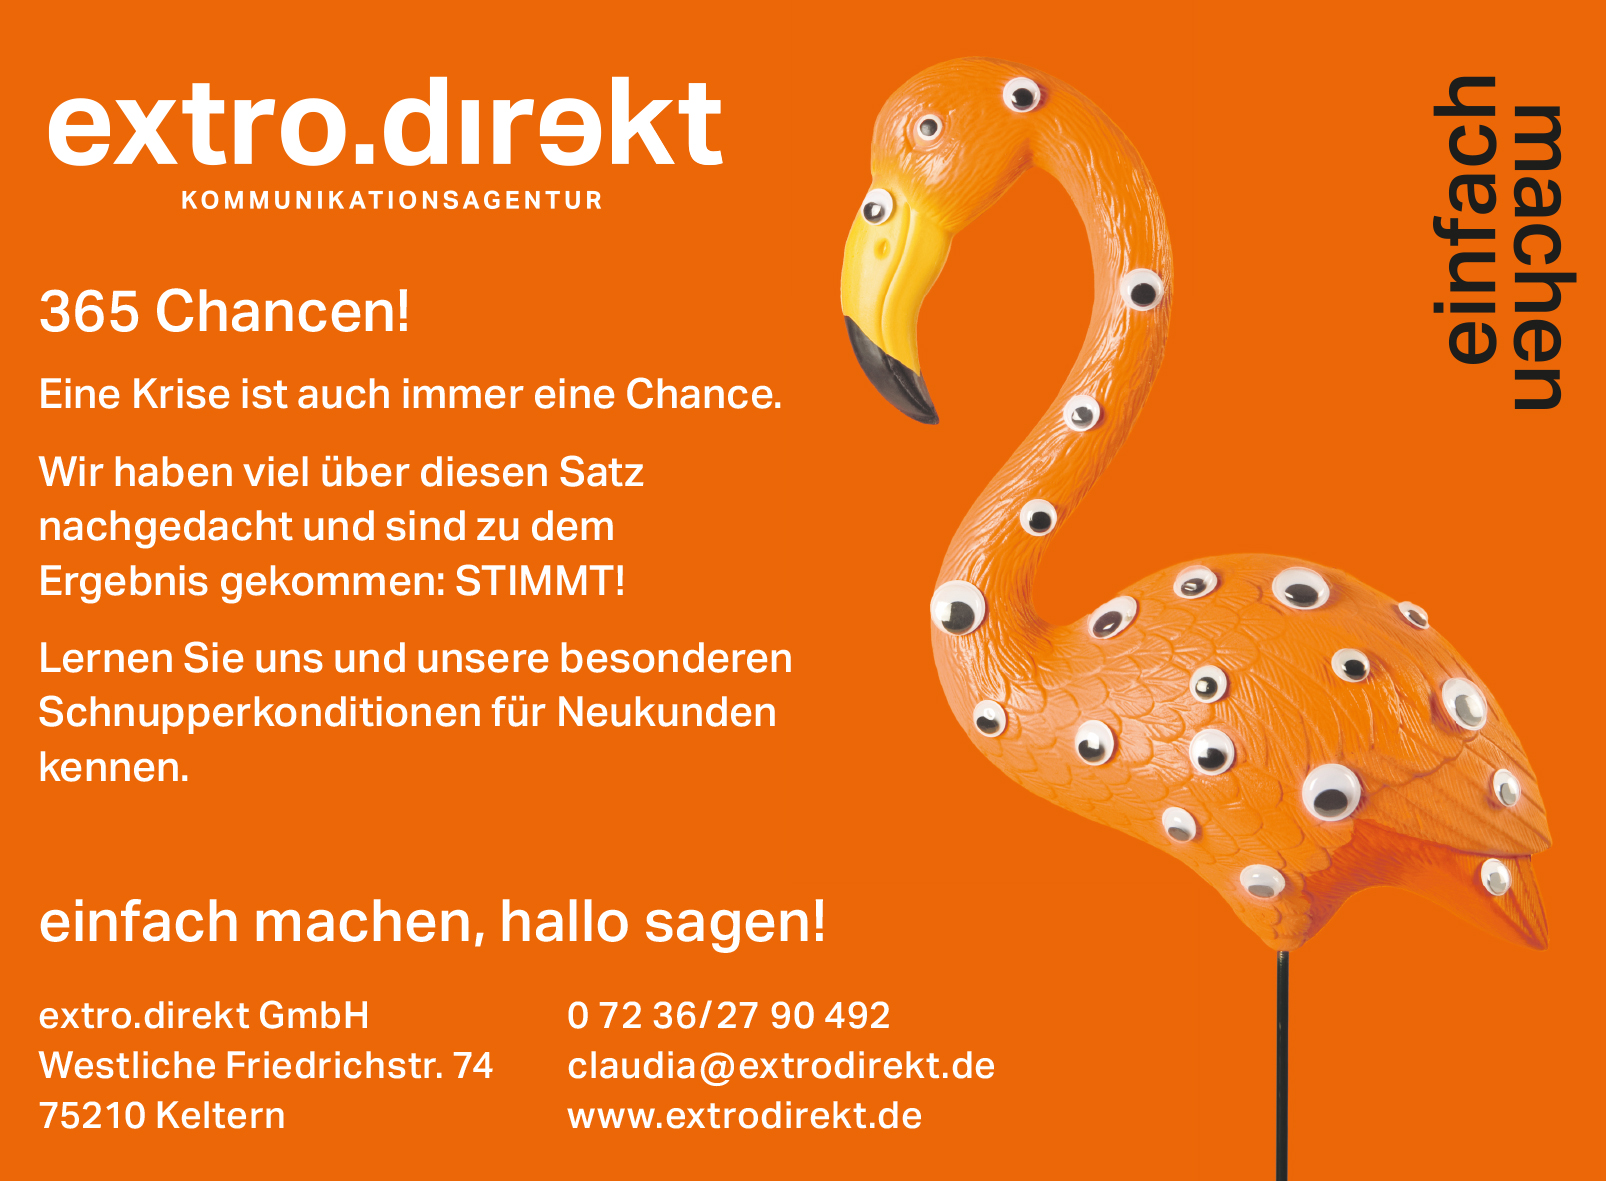 extro.direkt GmbH